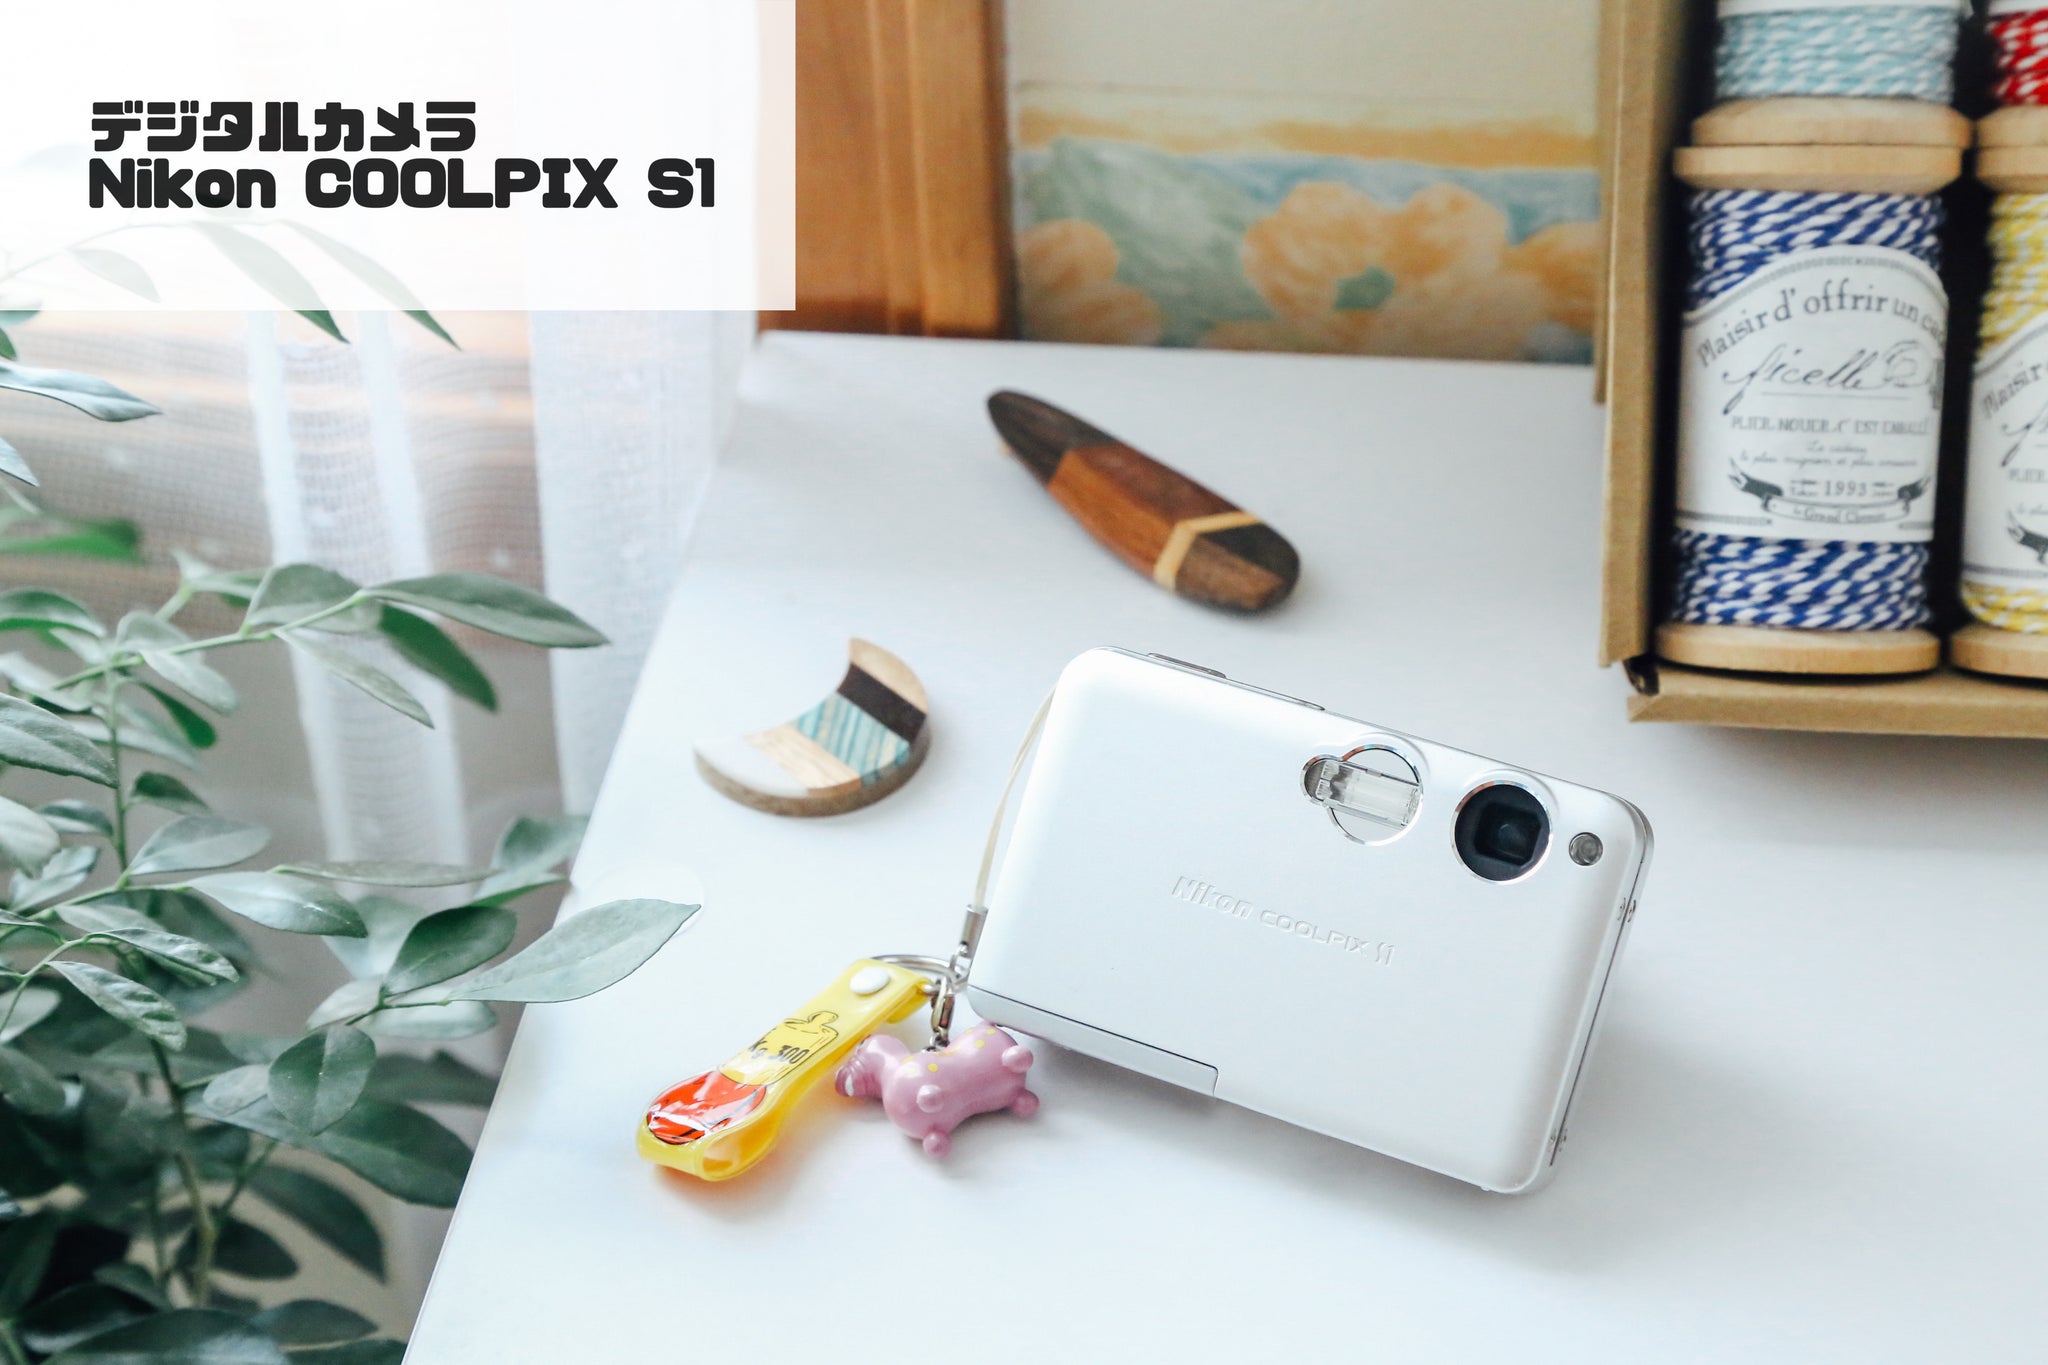 Nikon COOLPIX S1【完動品】【実写済み❗️】▪️オールドコンデジ 